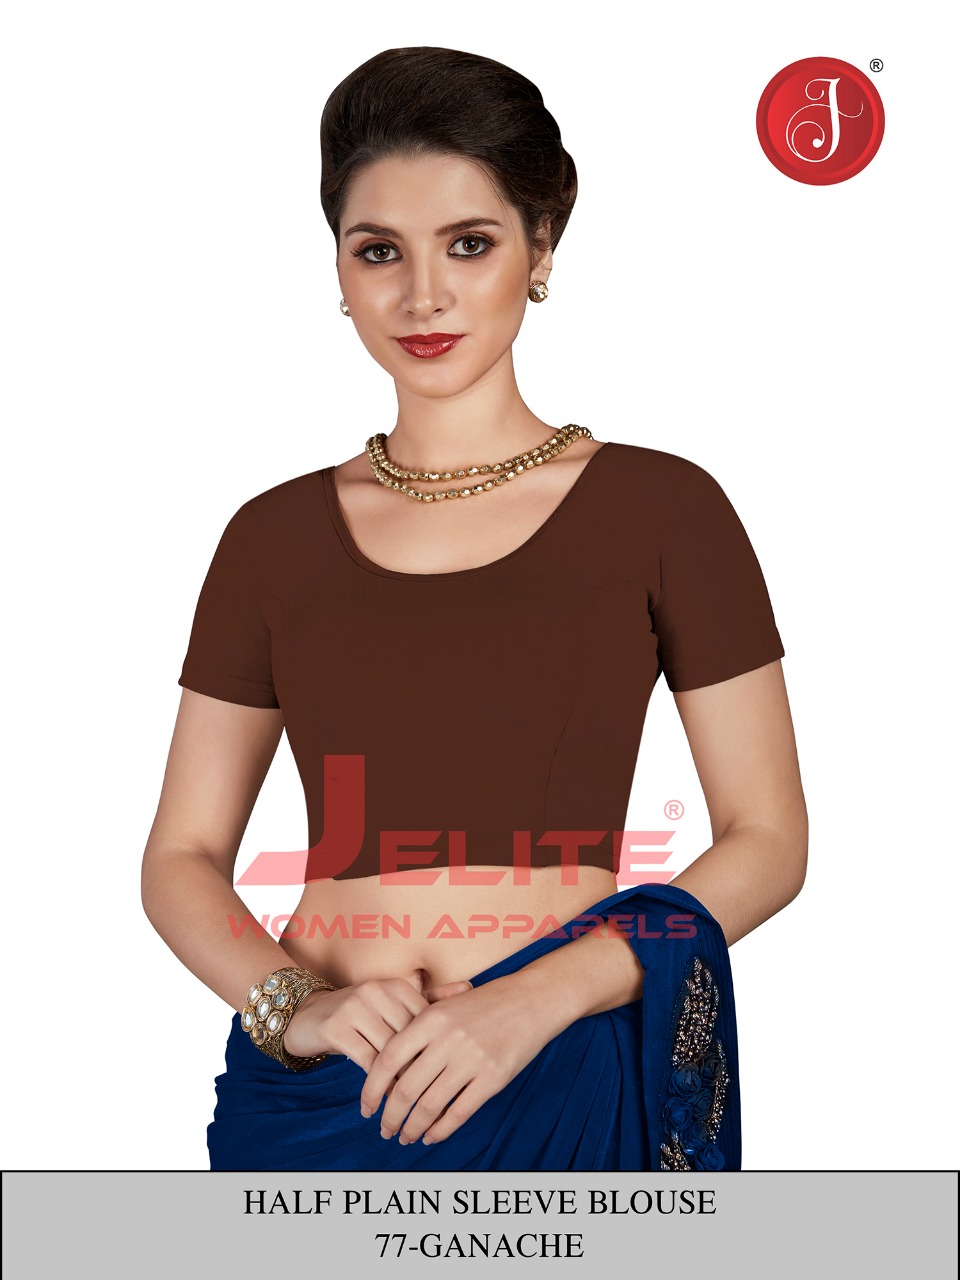 Jelite women Apparels fancy half sleeve blouse collection